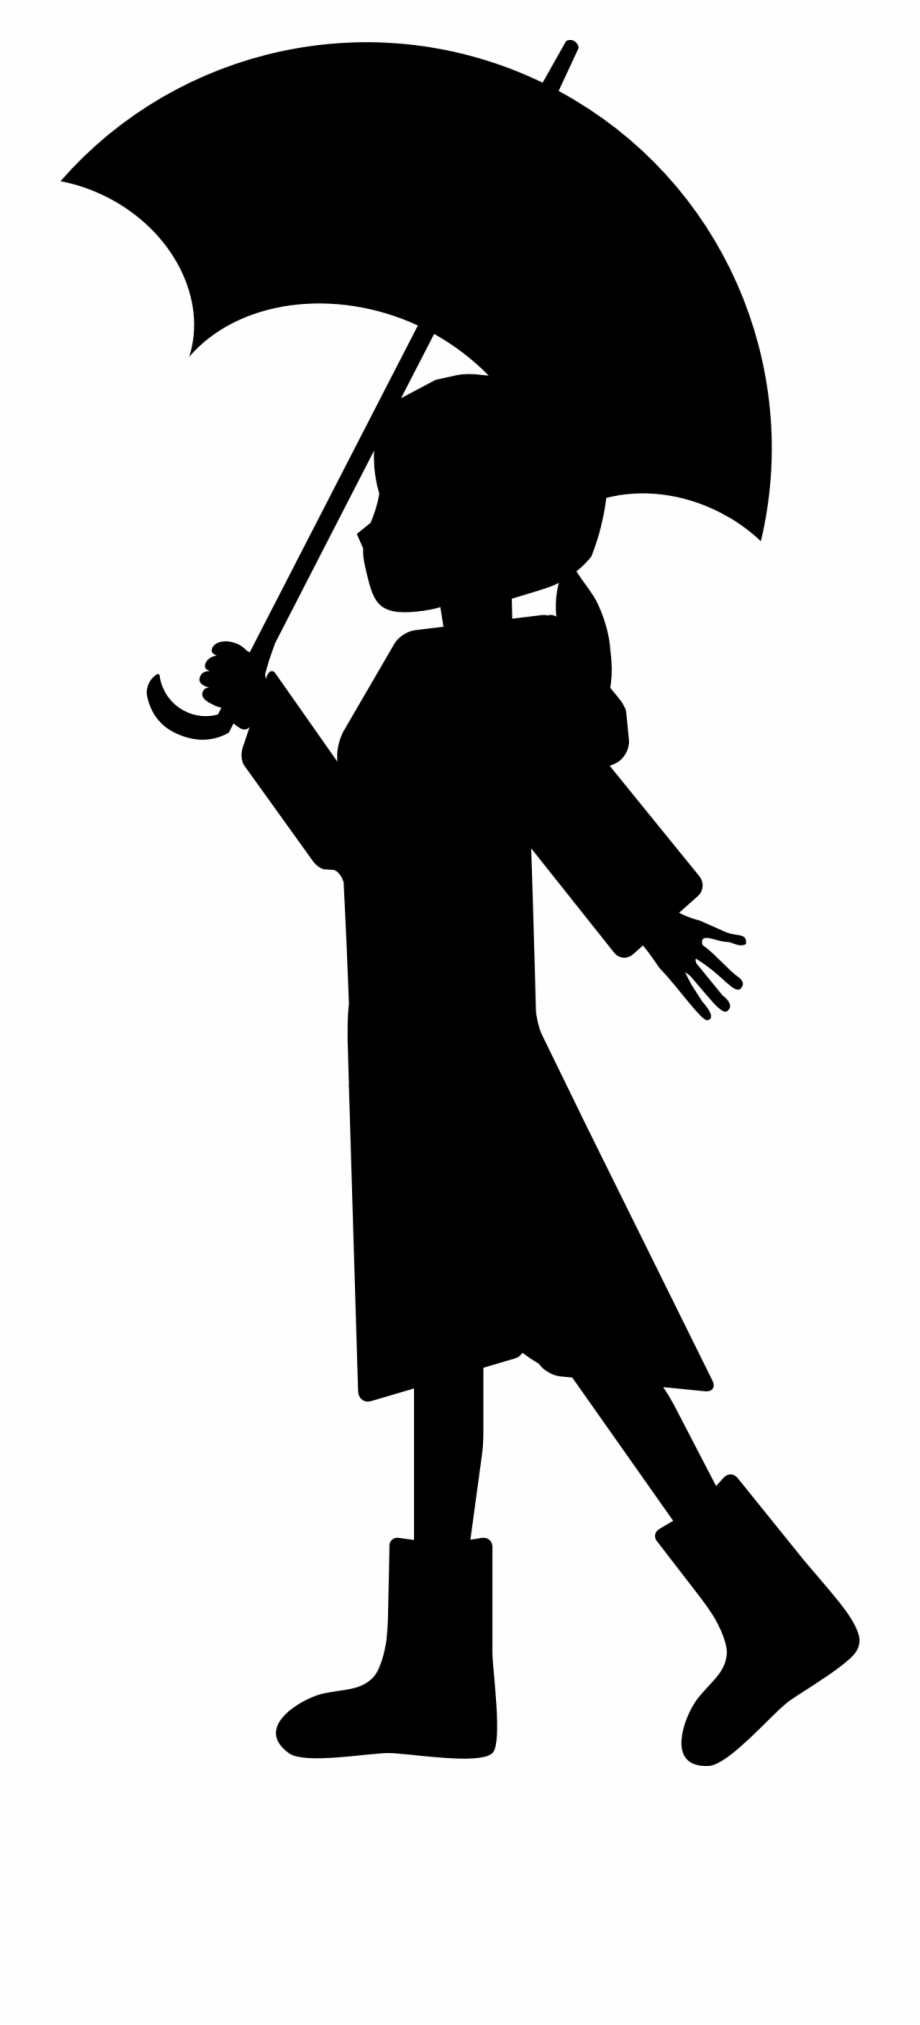 girl with umbrella silhouette
